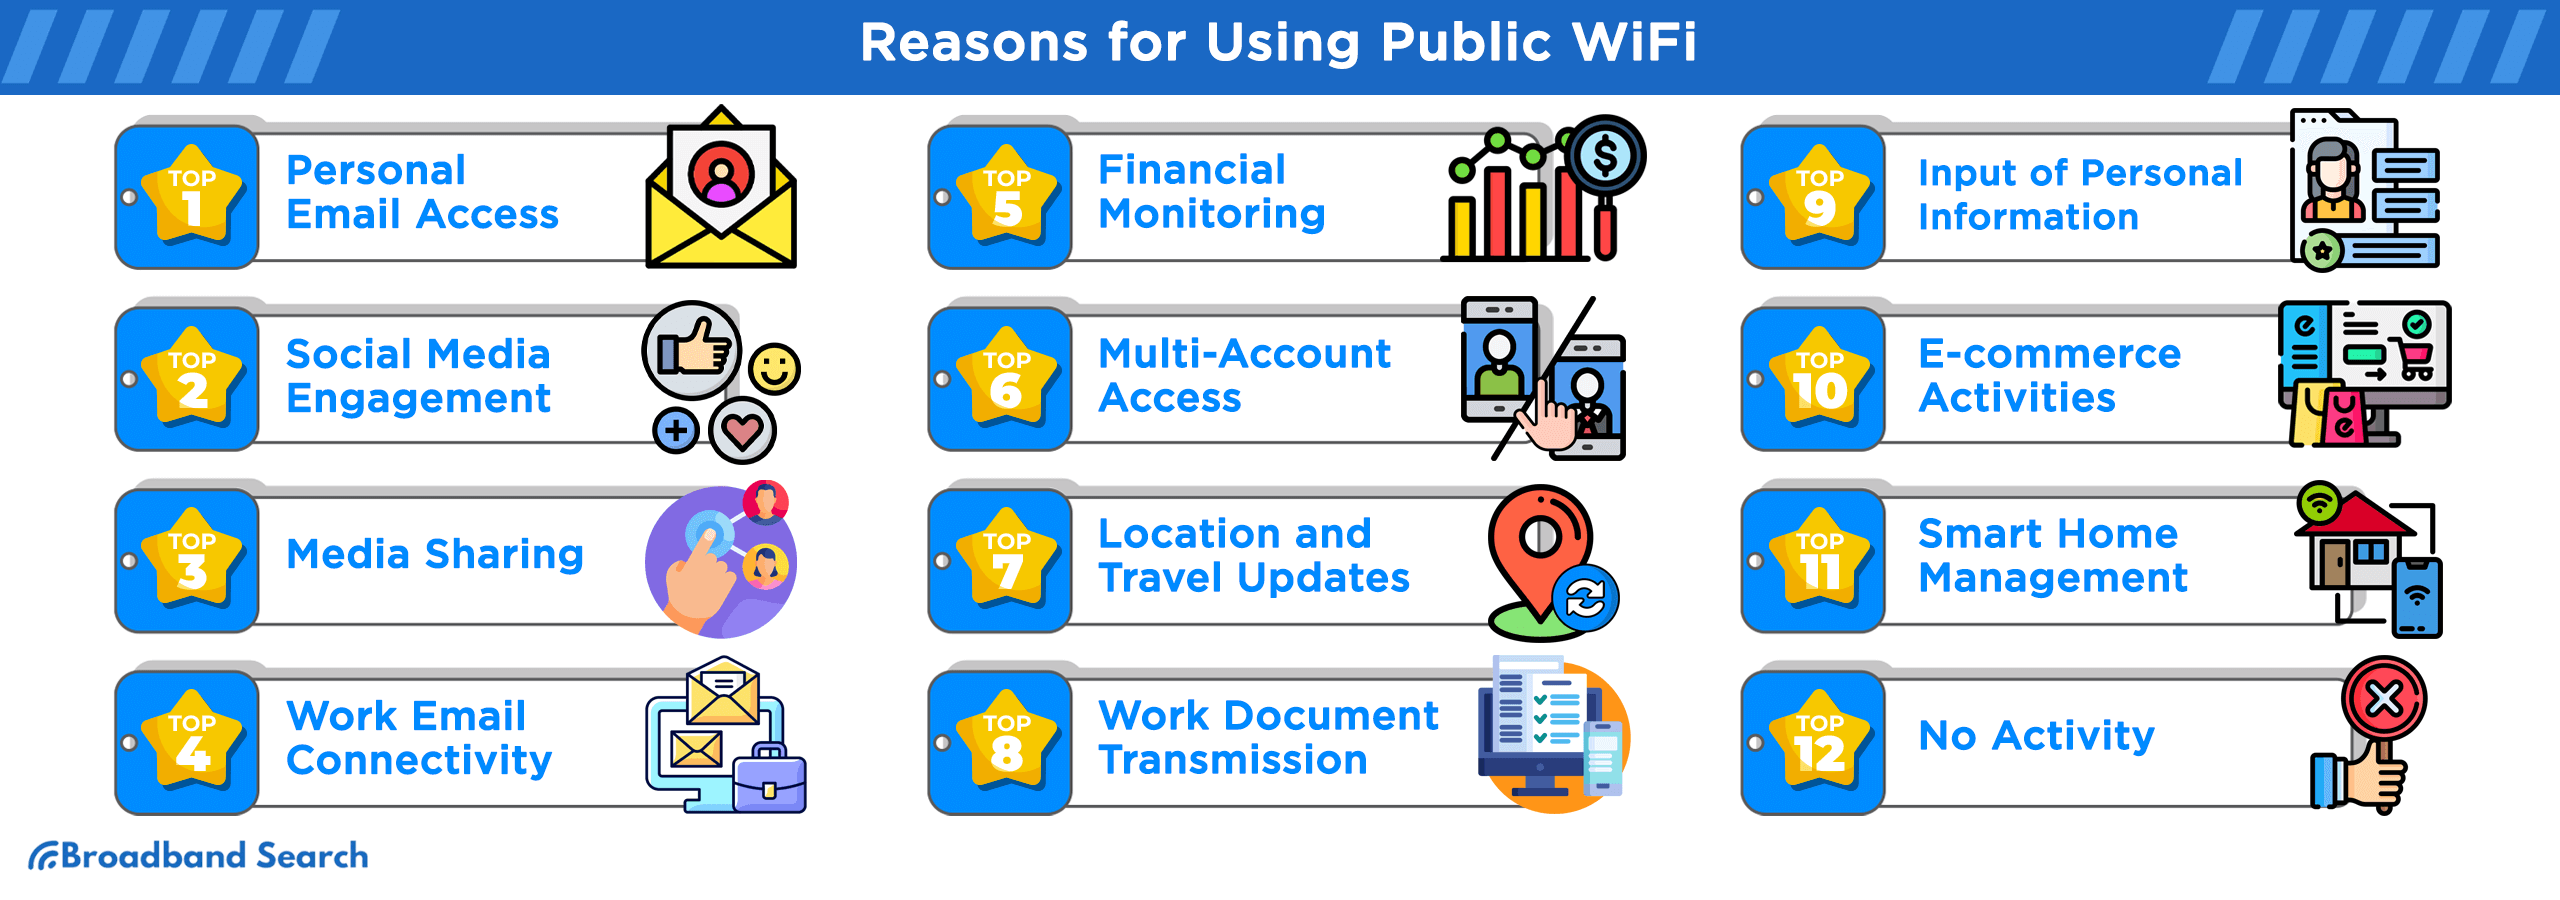 reasons for using public wifi